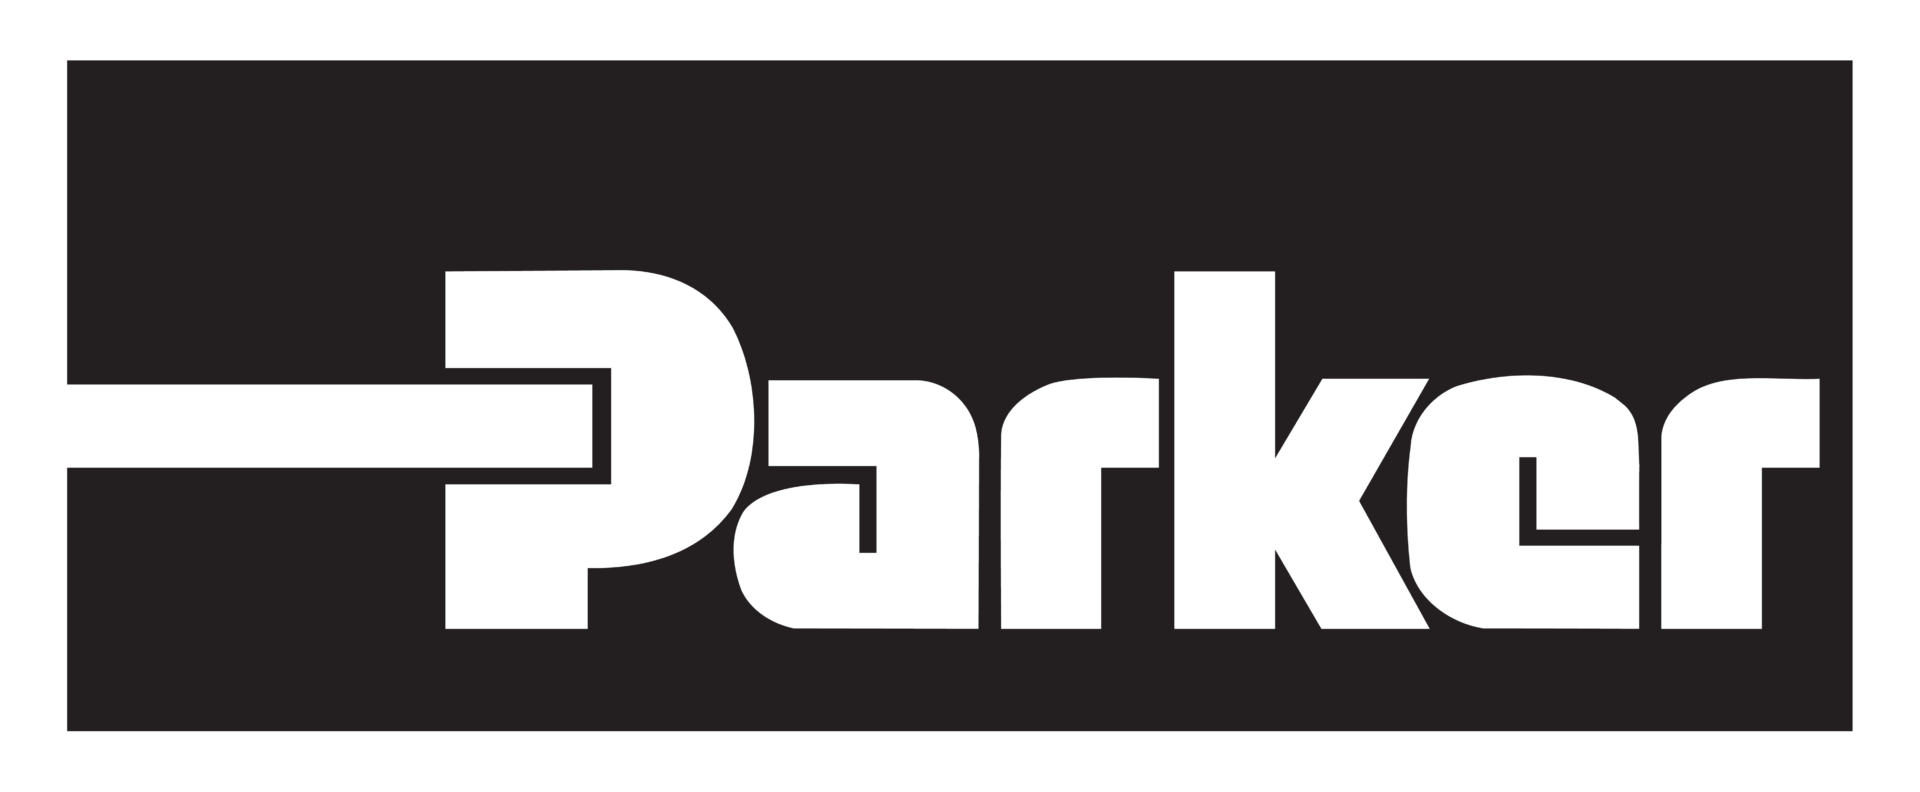 purepng.com parker hannifin logologobrand logoiconslogos 2515199387710dv6x - Company registration data